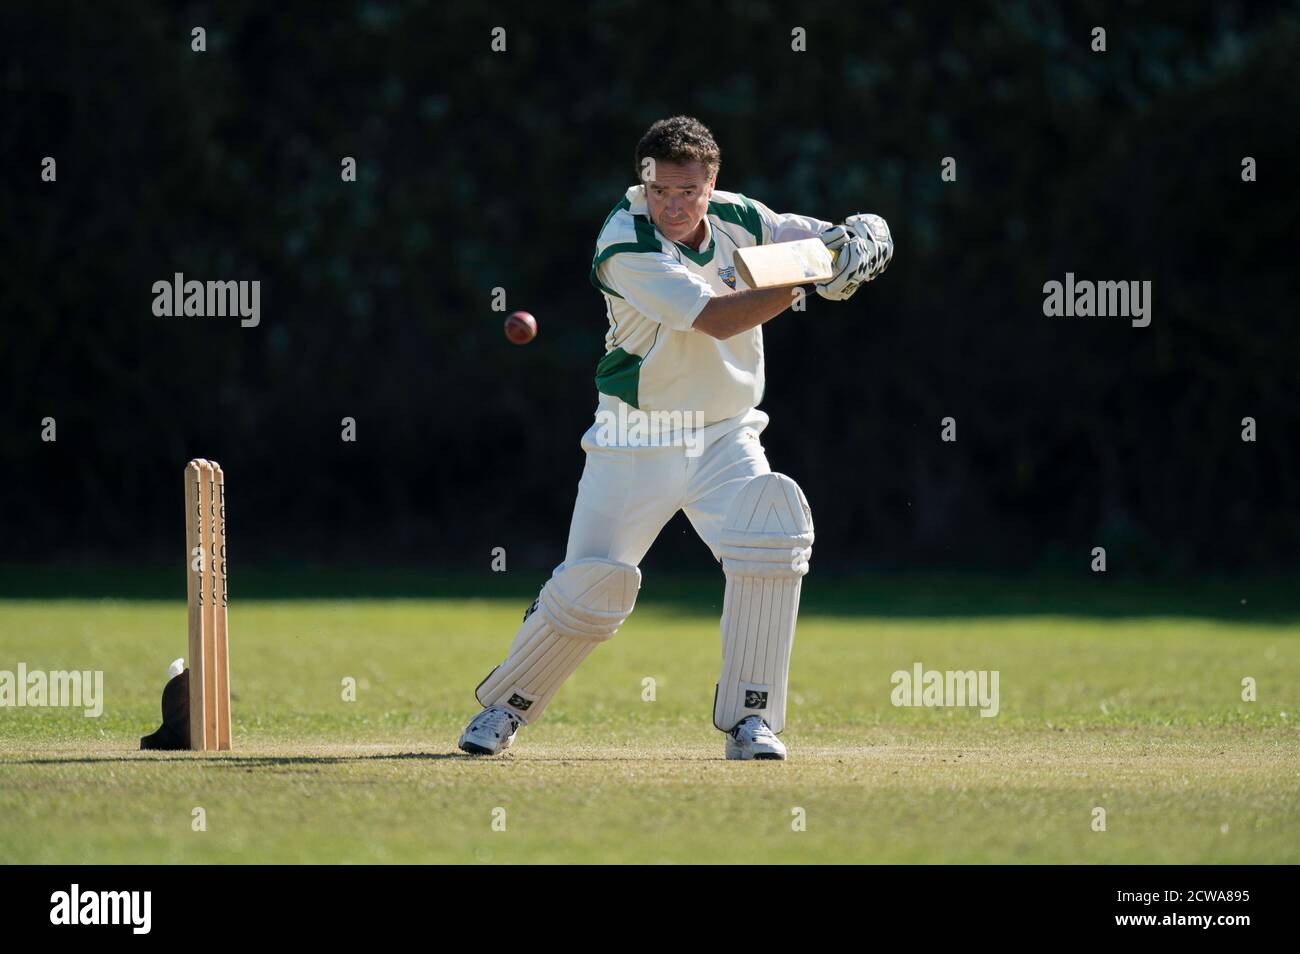 Cricket batsman playing shot. Stock Photo